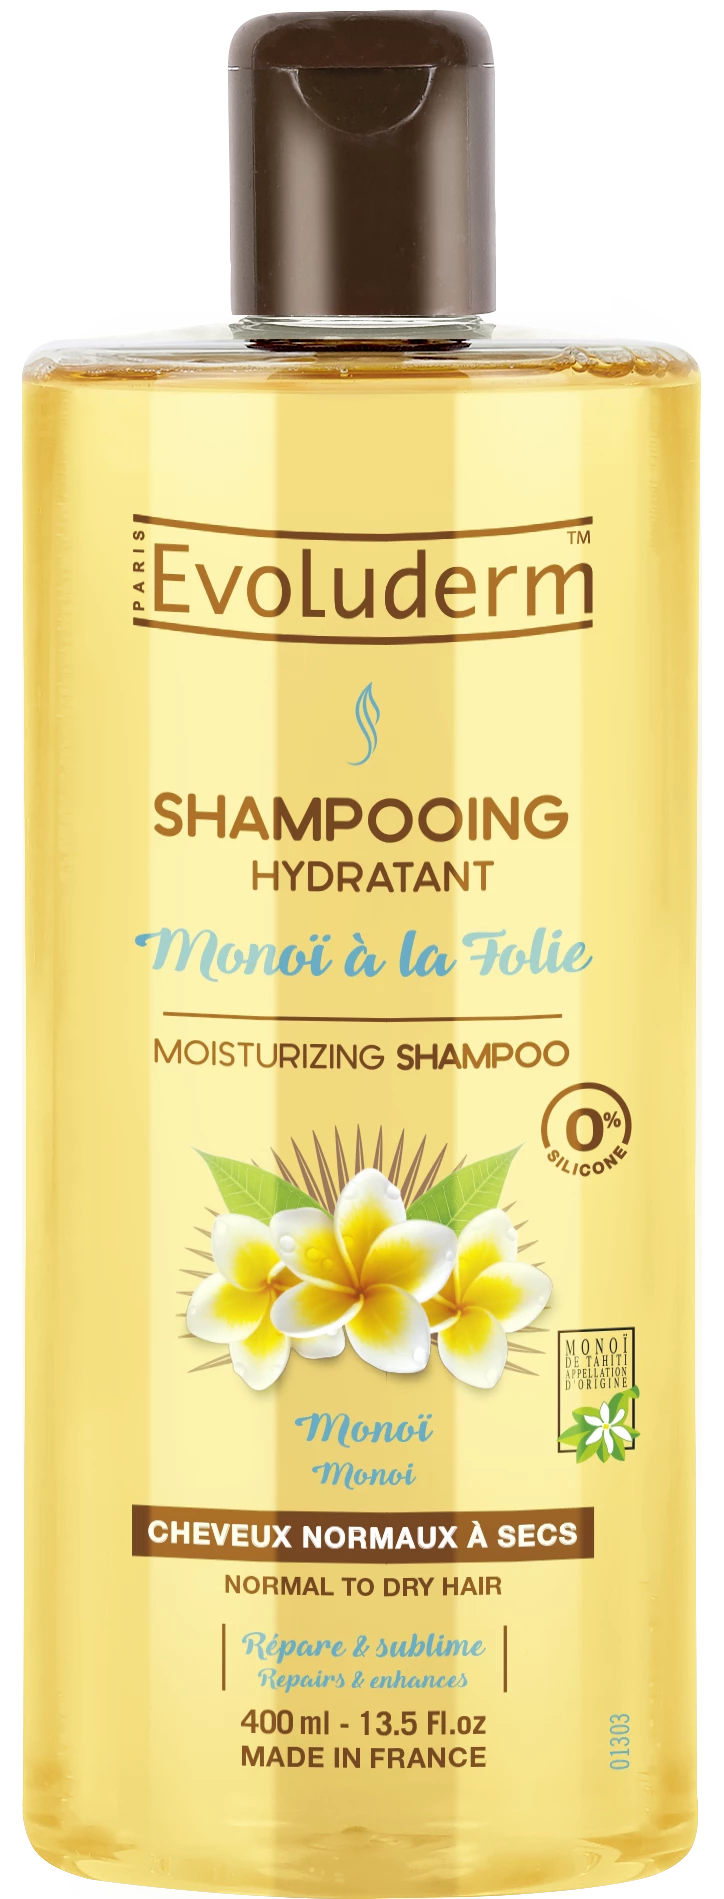 Shampooing Hydratant Monoi à la Folie, 400ml - EVOLUDERM